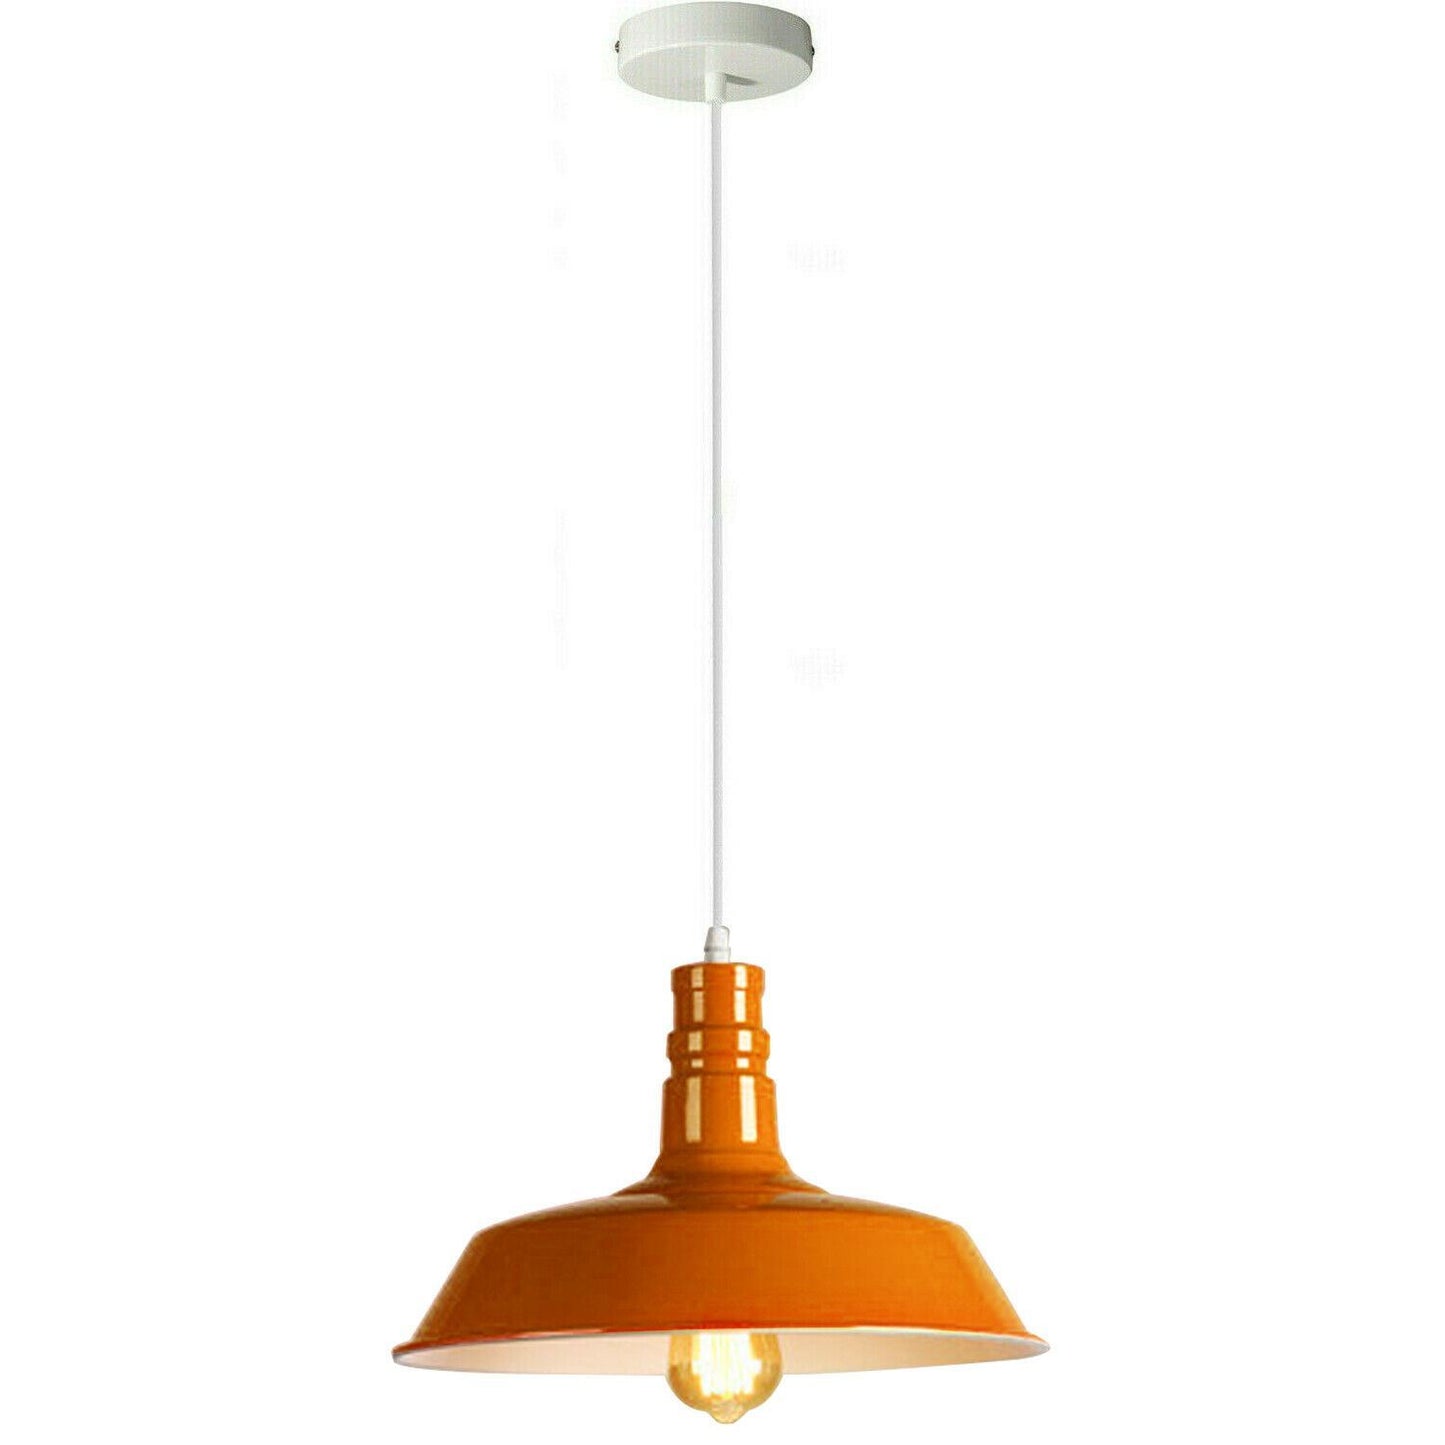 Modern Contemporary Adjustable Ceiling Shade Pendant Light ~2105